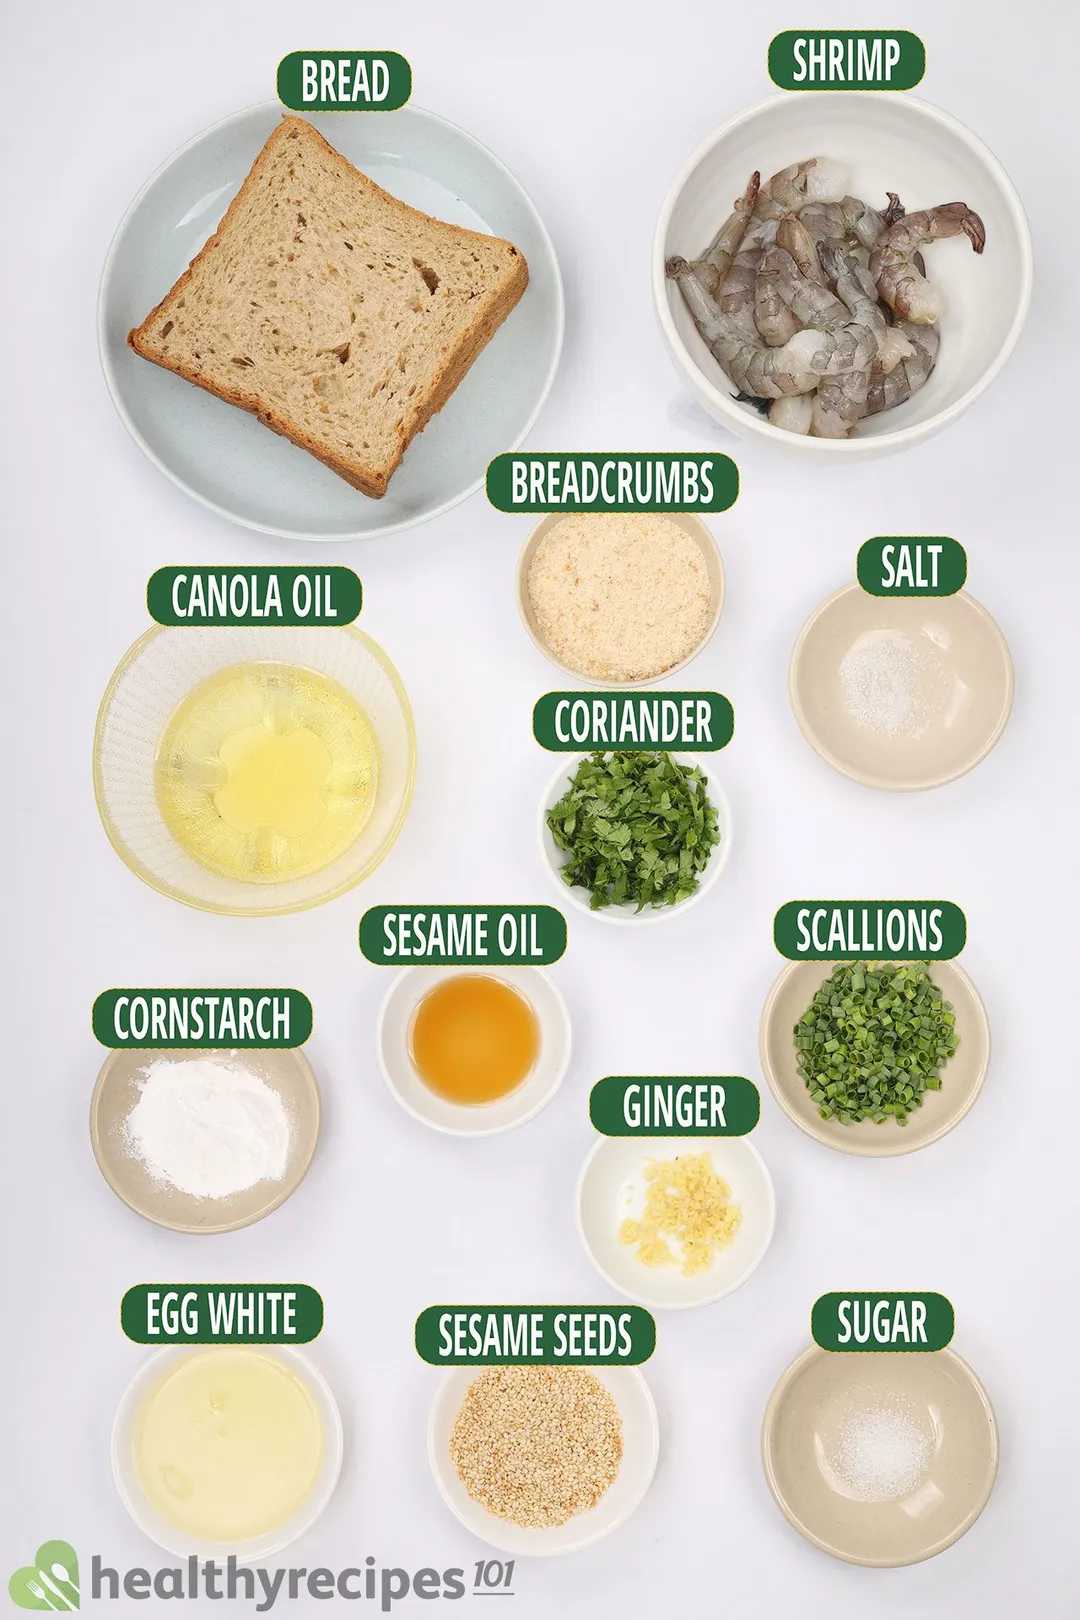 Ingredients for Shrimp Toast